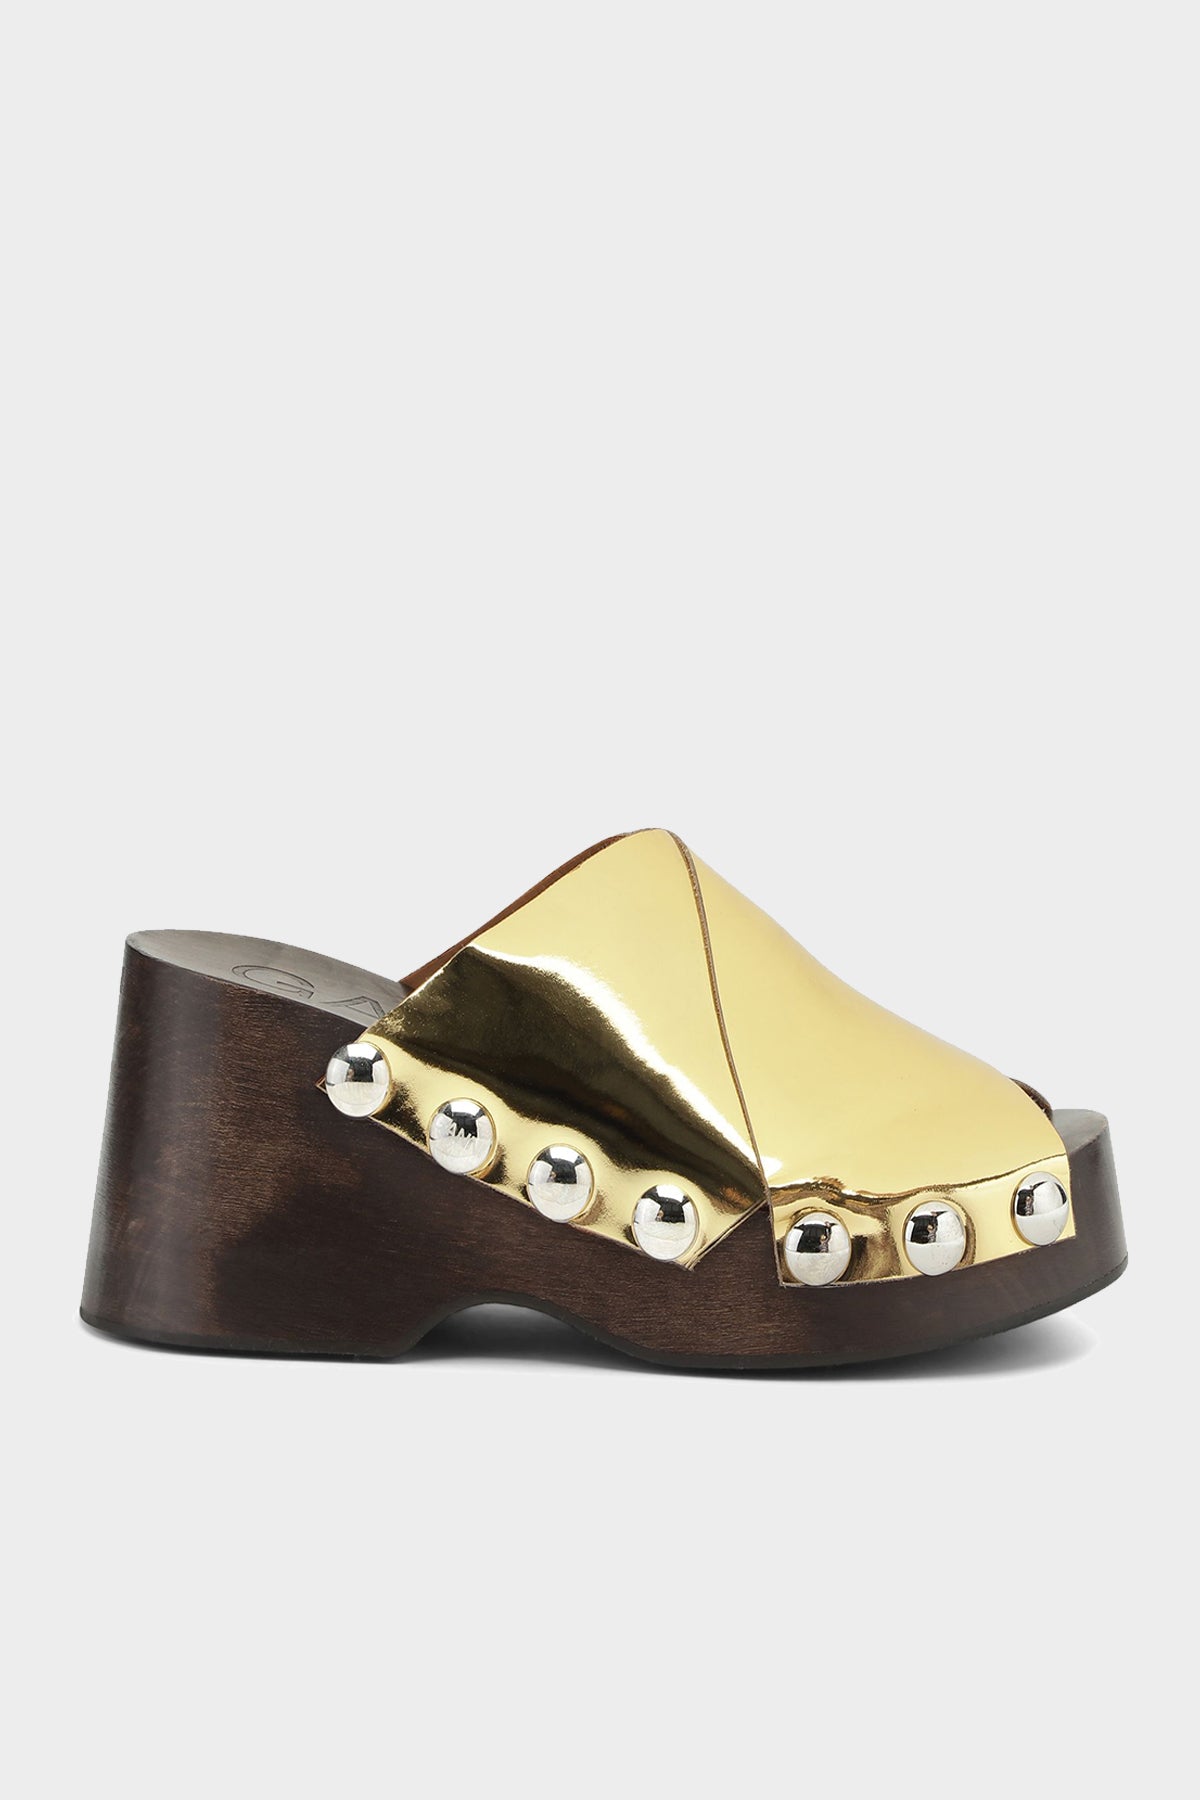 Retro Peep Toe Wood Sandal in Gold - shop-olivia.com